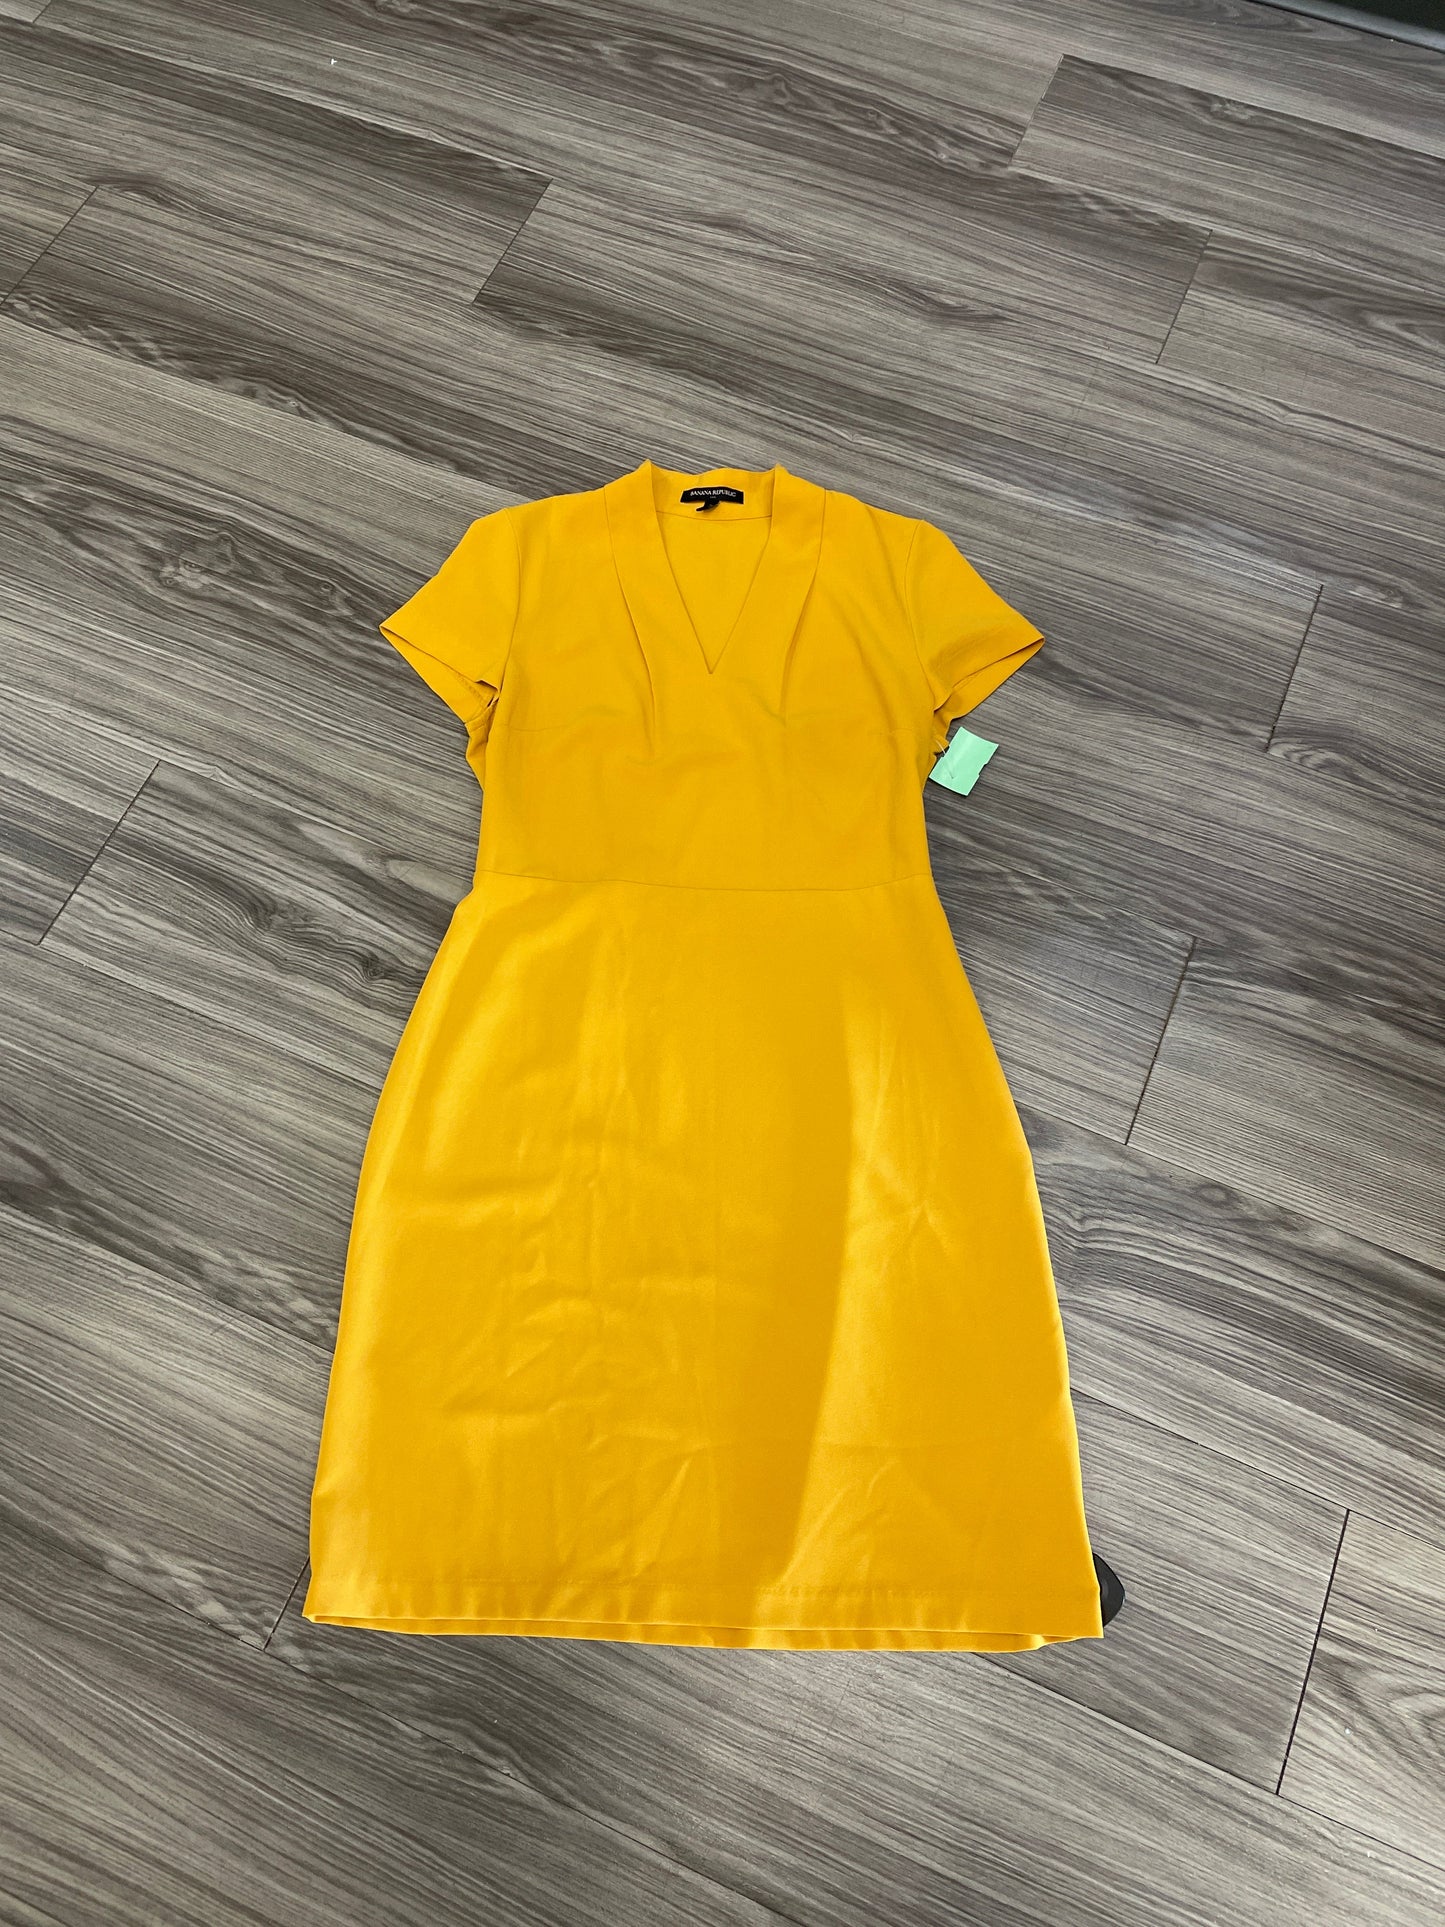 Yellow Dress Party Short Banana Republic, Size 4